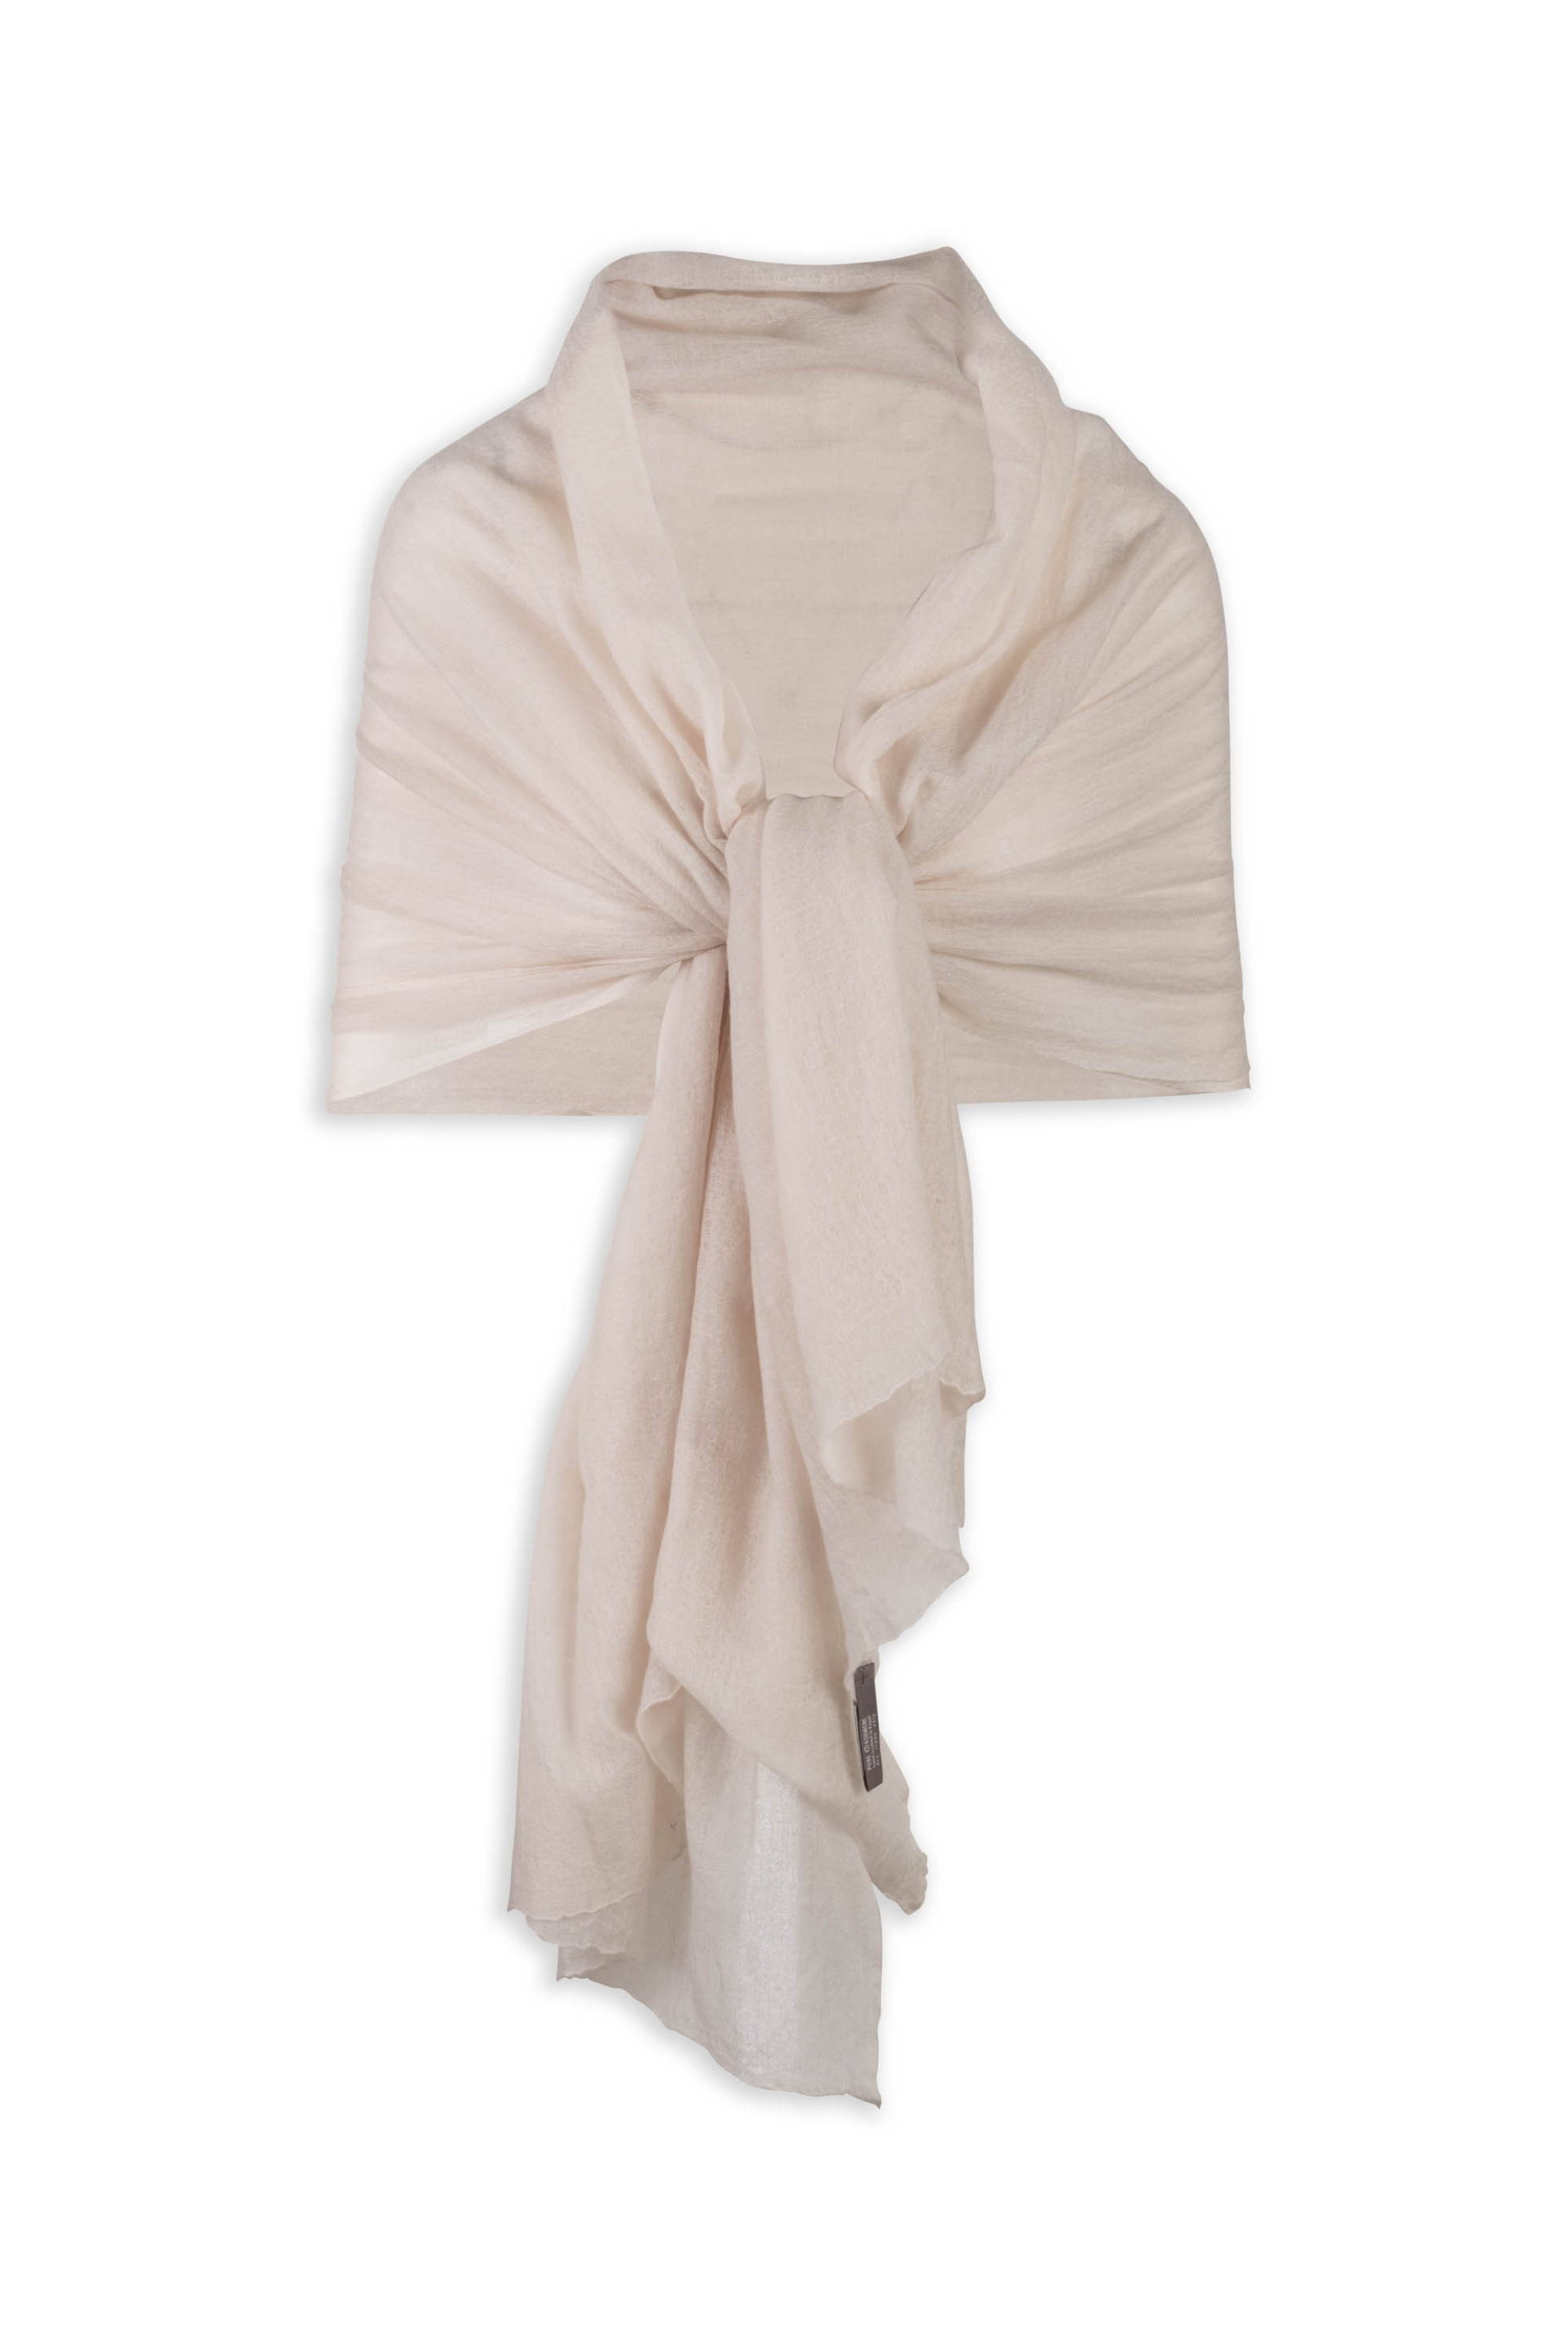 white cashmere shawl by Ala von Auersperg for bridesmaids gifts